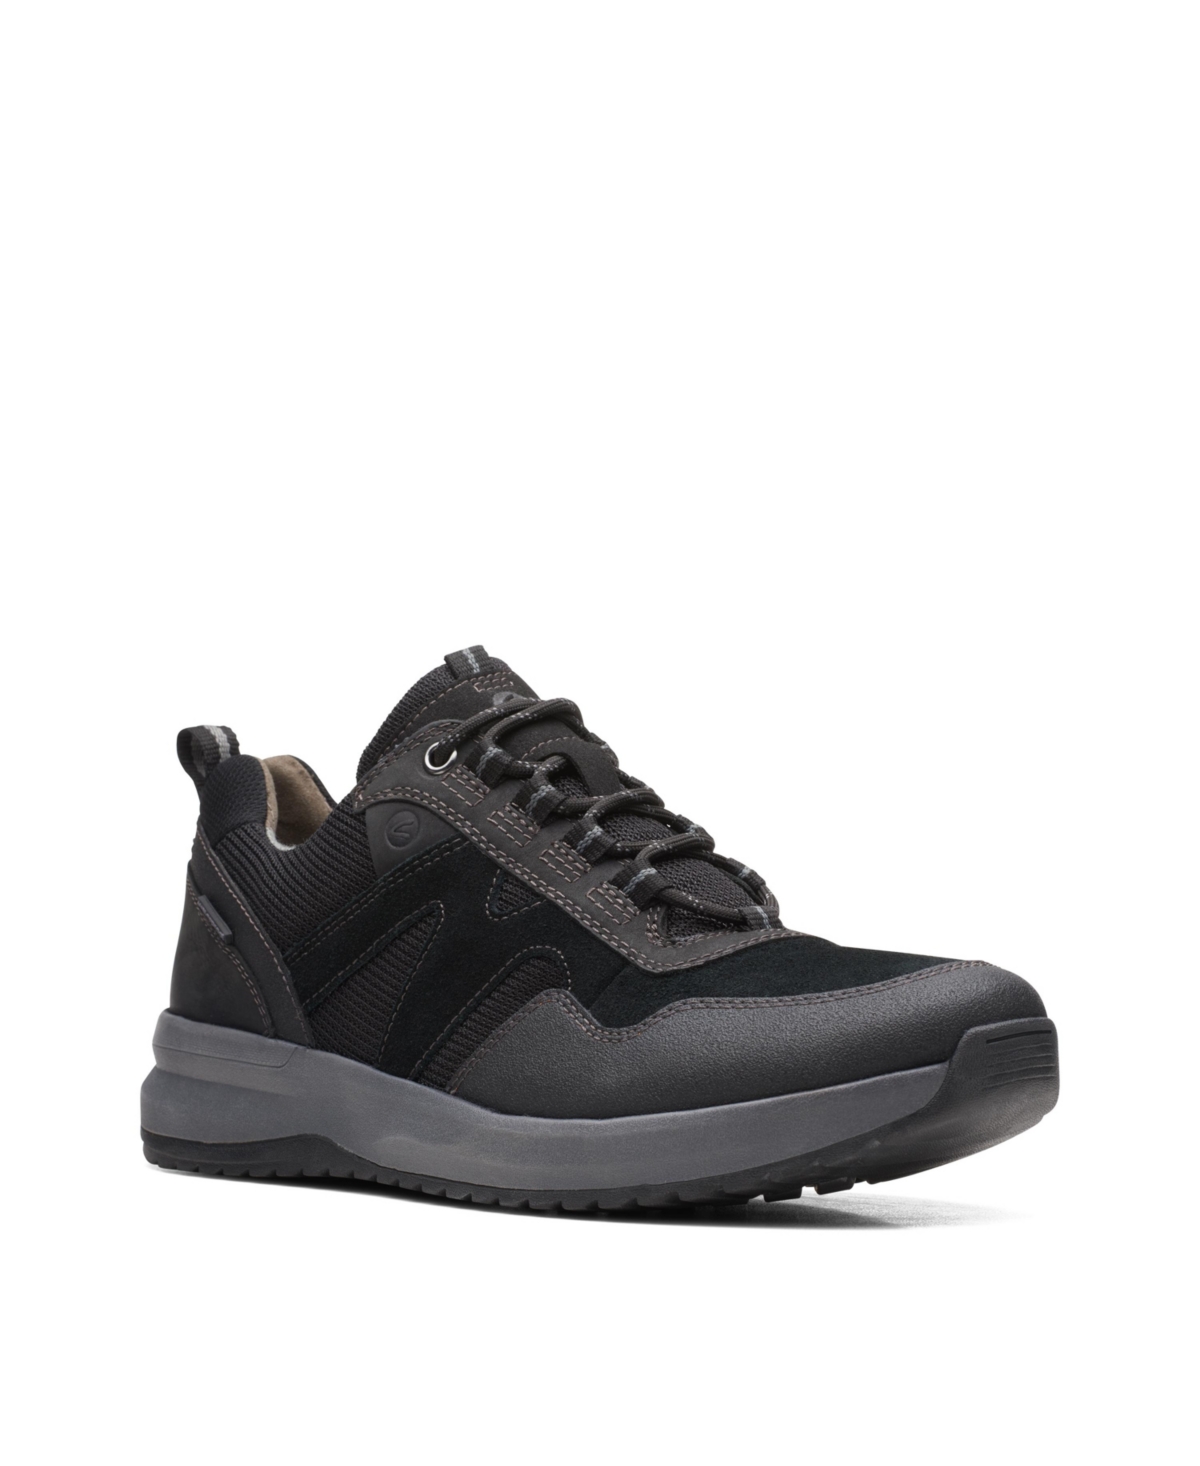 Men's Collection Wellman Trail Slip On Shoes - Black Multi